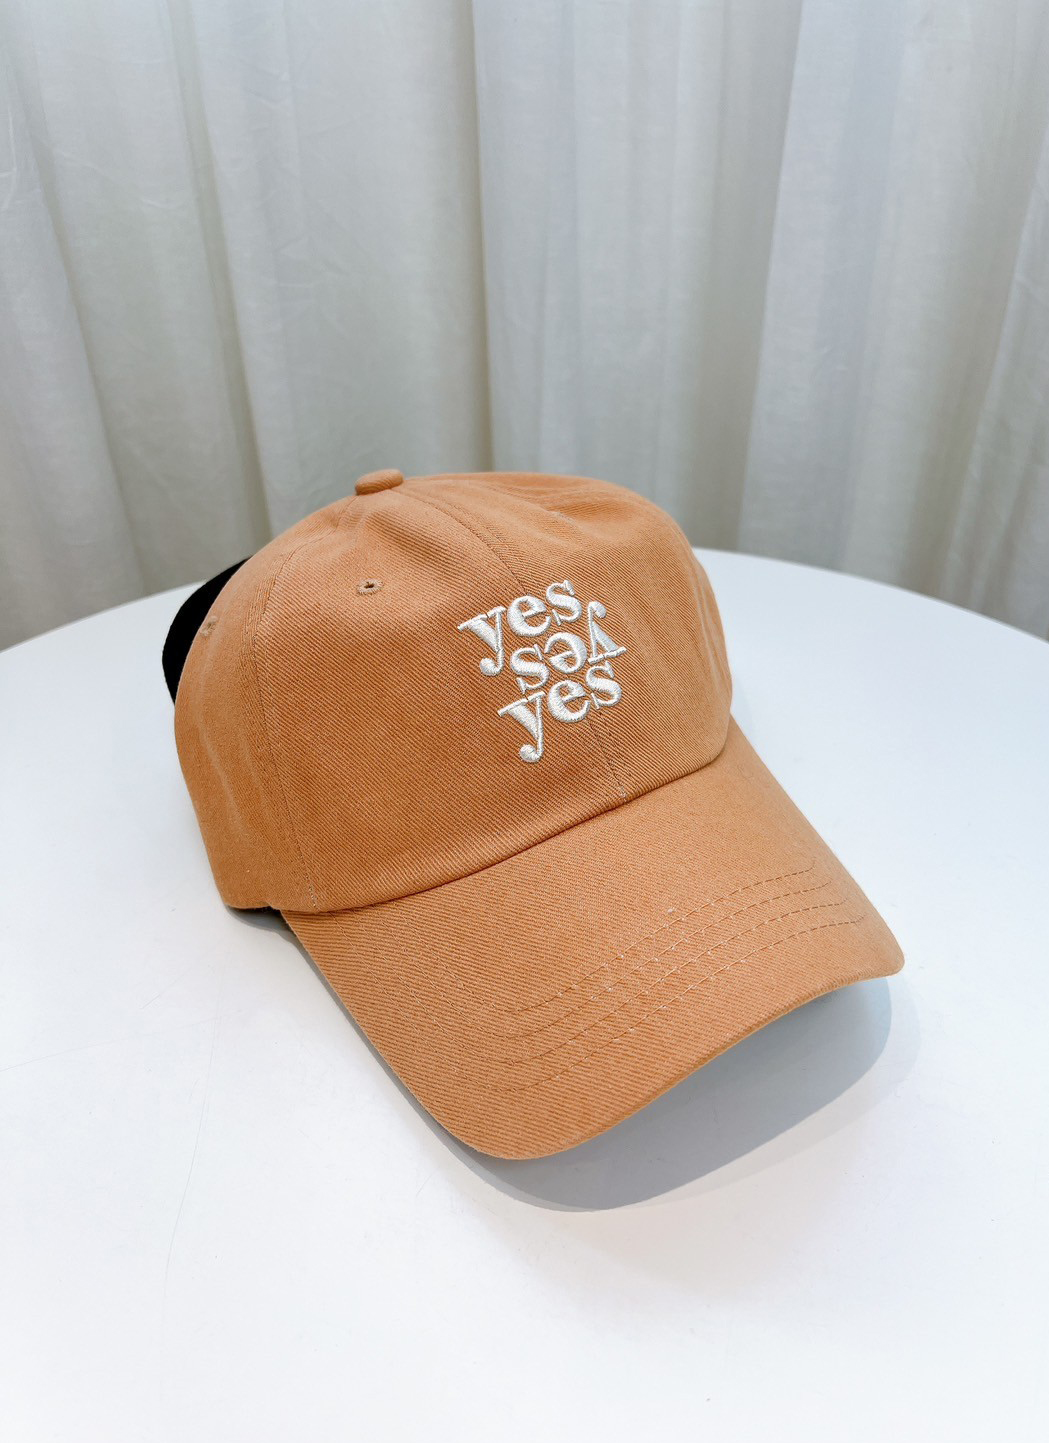 Yes x3美式棒球帽